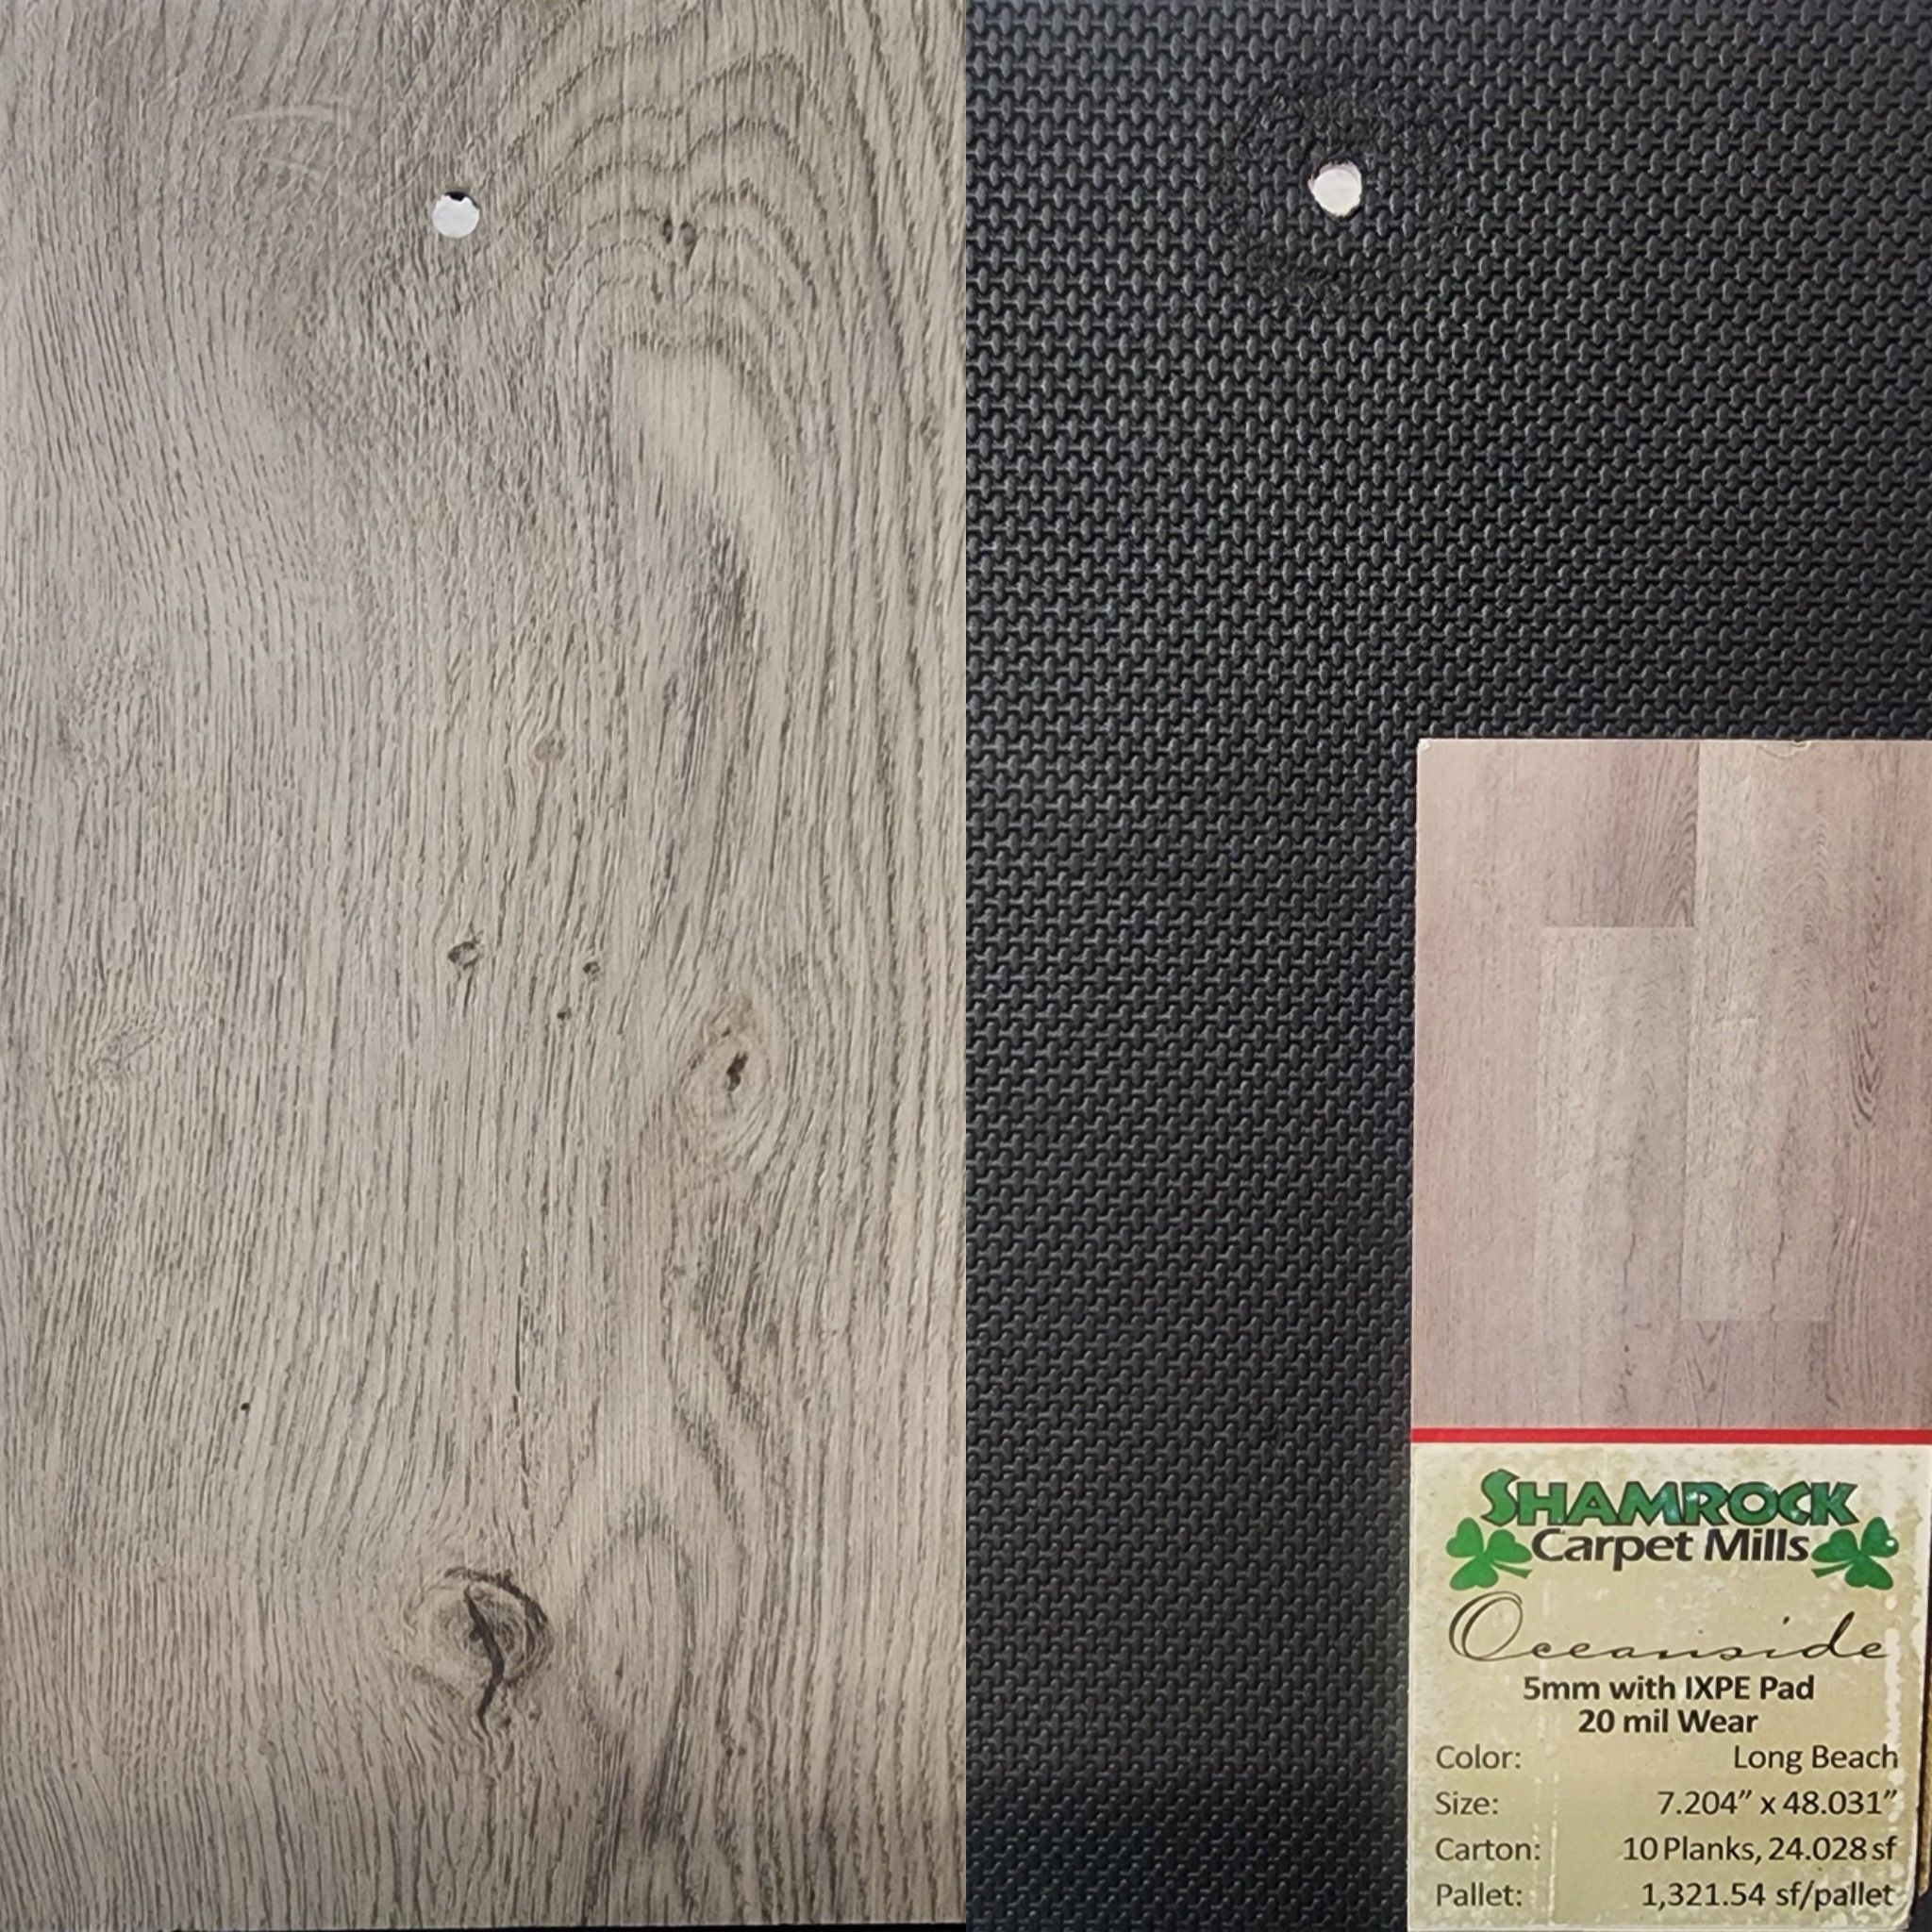 Online/Mobile Showroom Samples - Vinyl Plank for Cut a Rug Flooring Installation in Lake Orion, MI